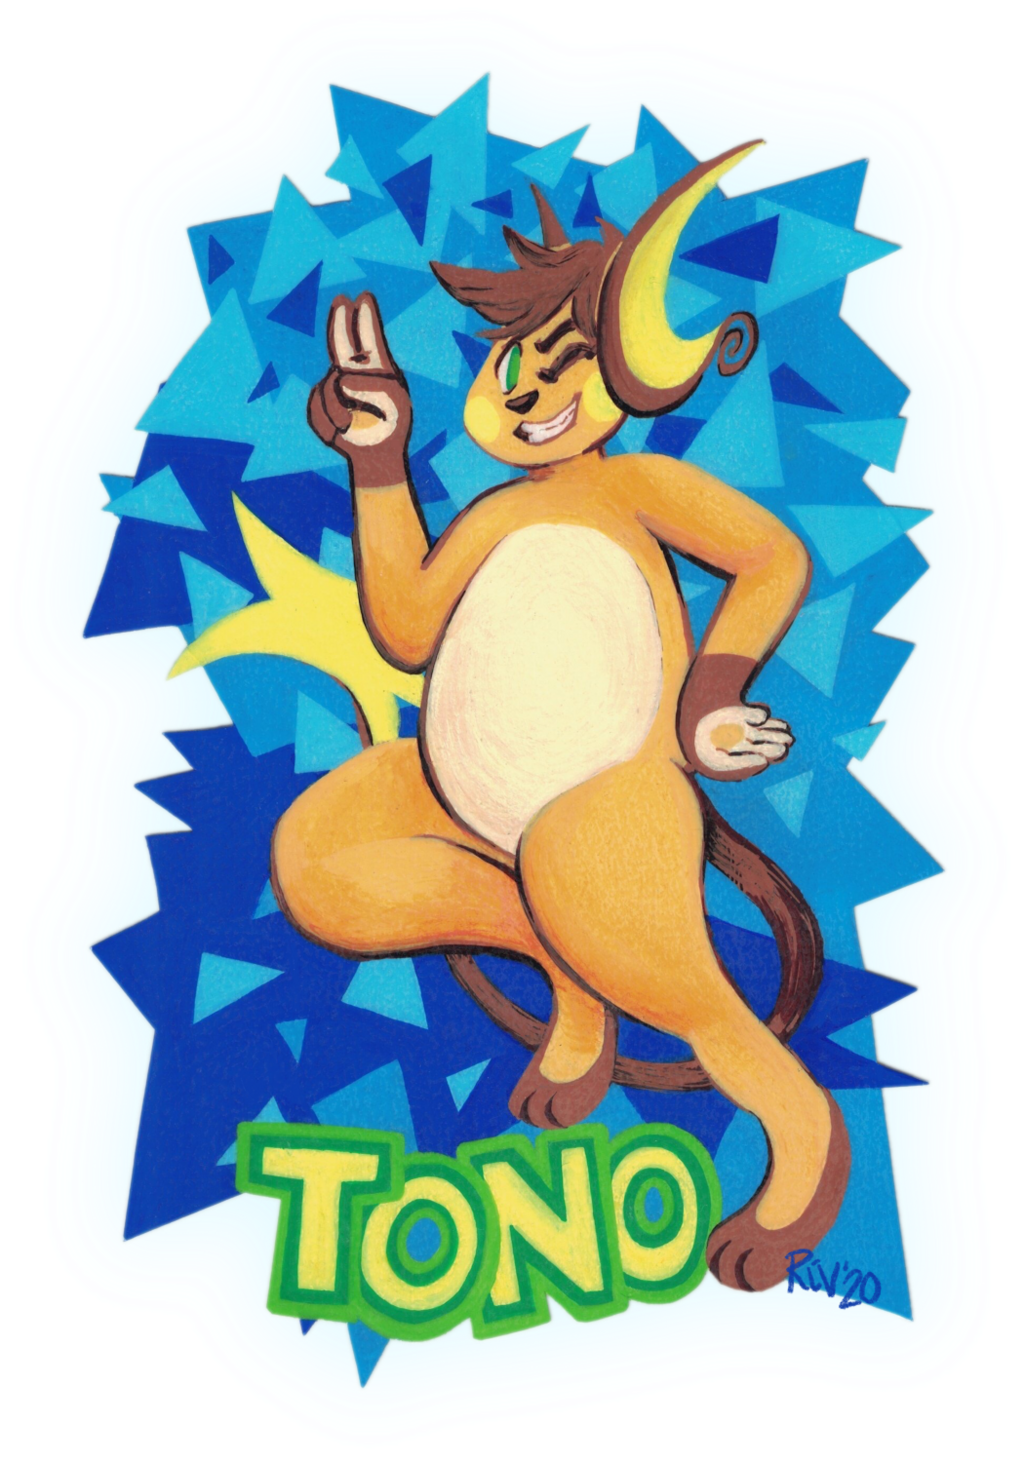 Most recent image: Tono Badge